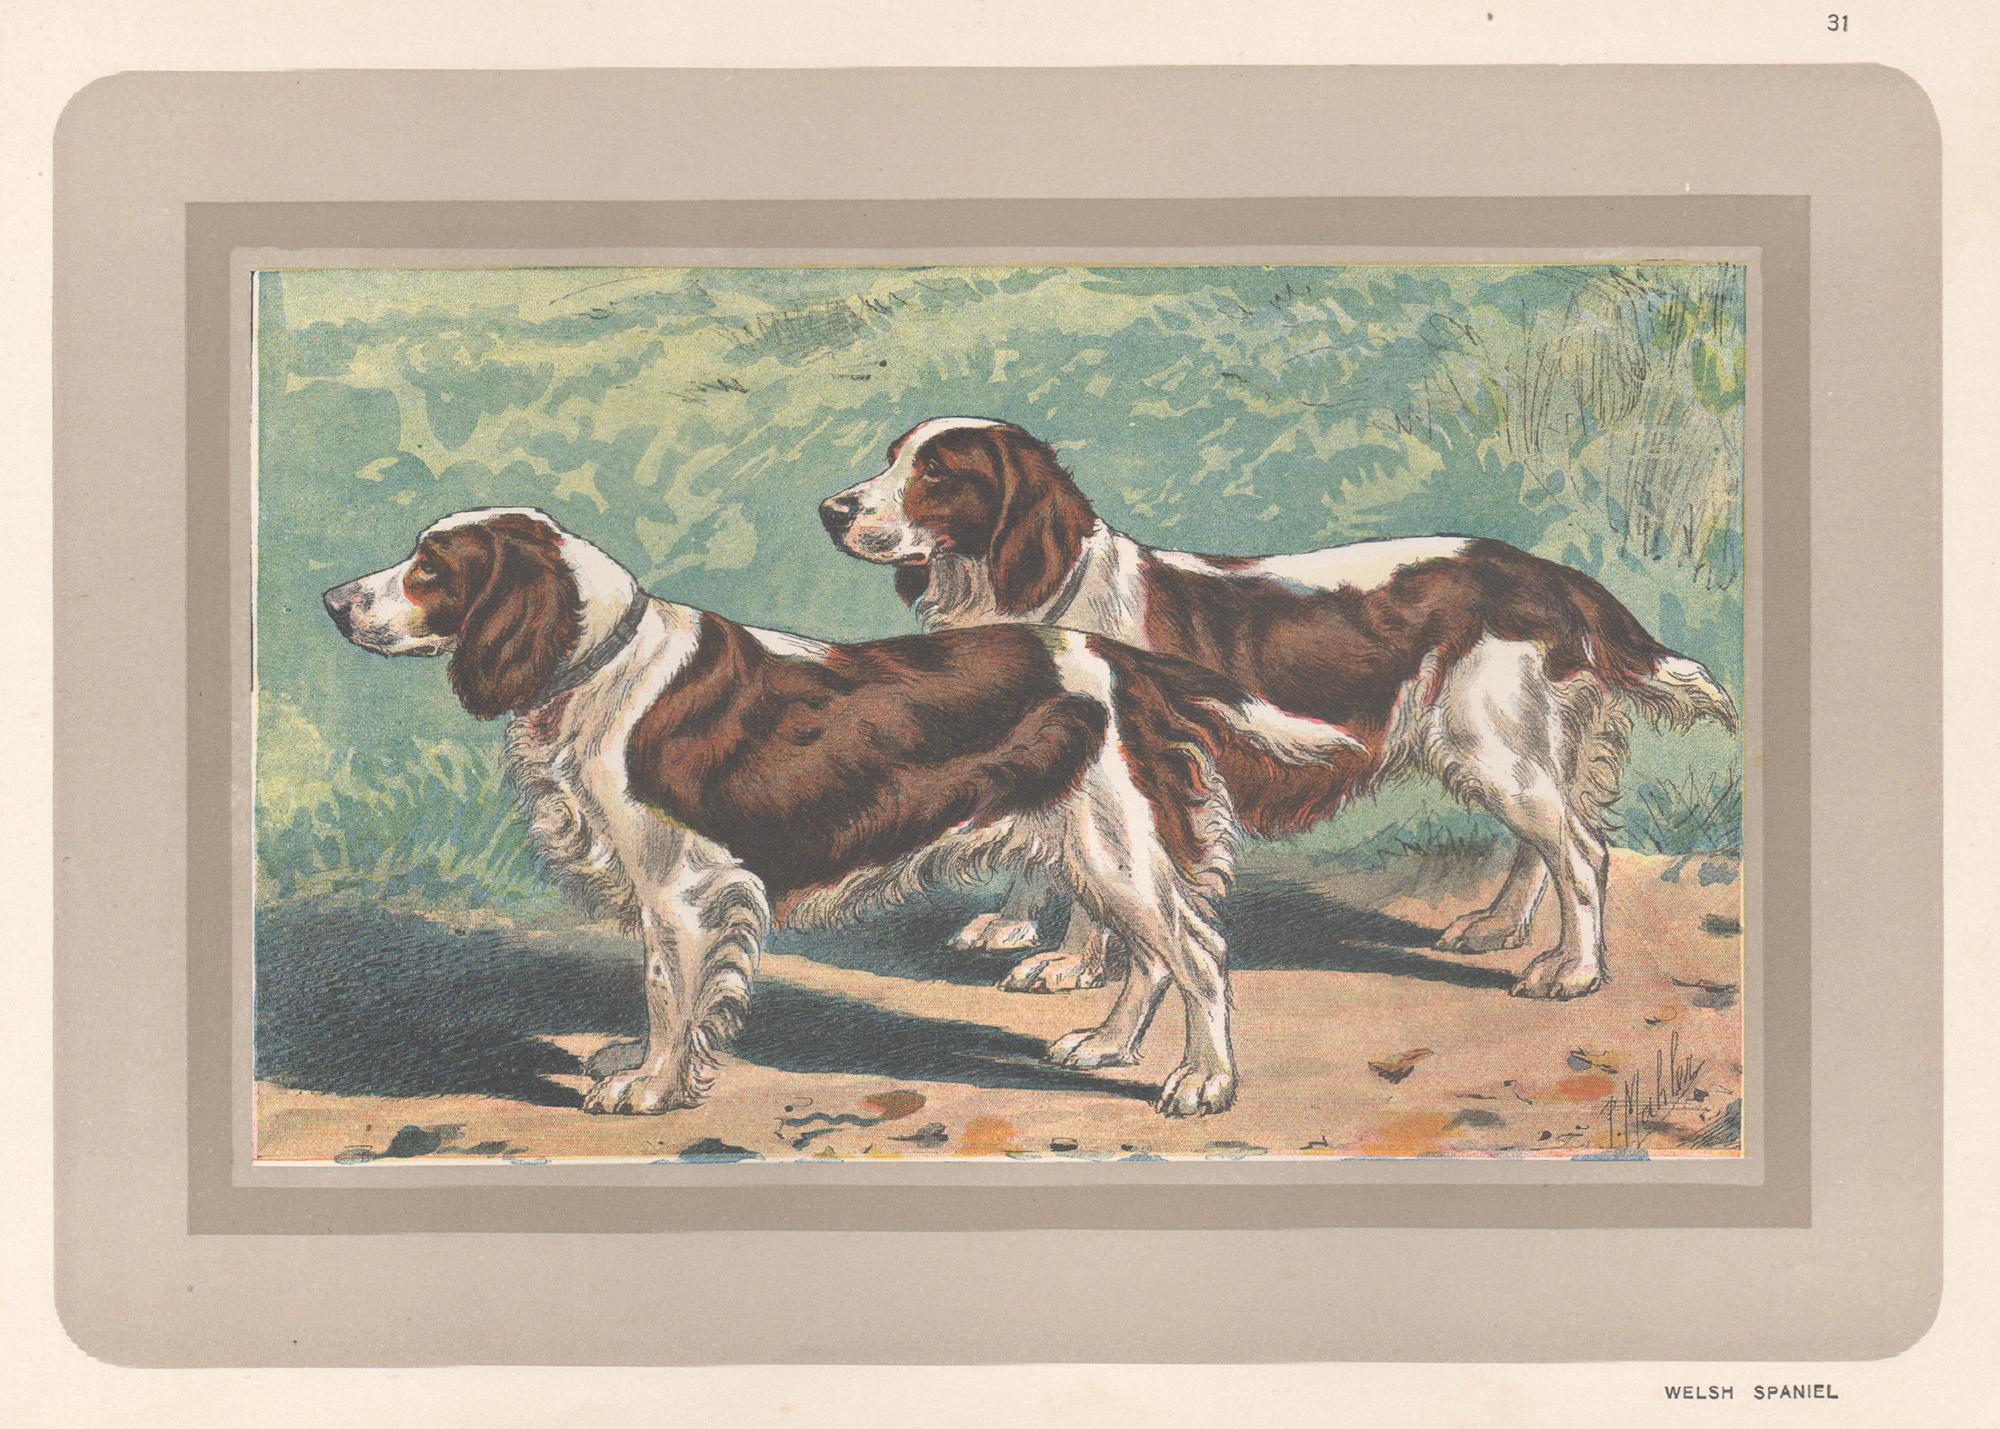 P. Mahler Animal Print - Welsh Spaniel, French hound dog chromolithograph print, 1930s